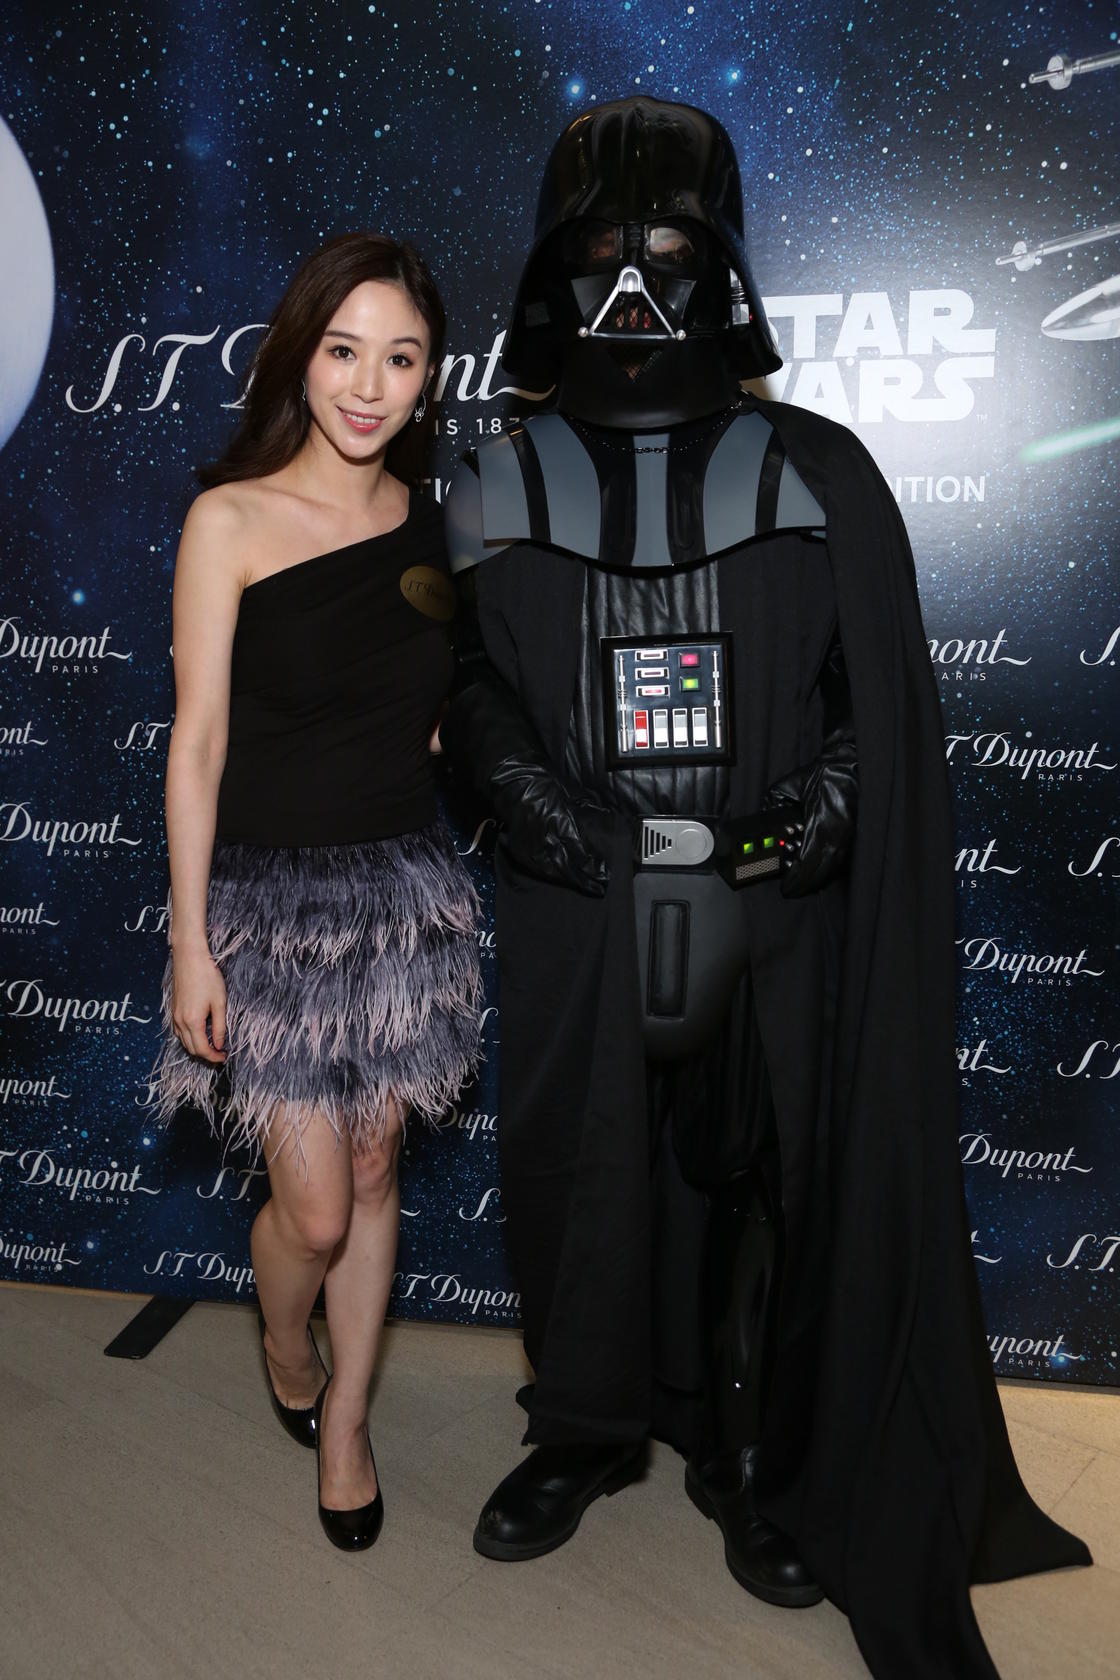 Anina Ho encounters Darth Vader at thelaunch party #stylescmp